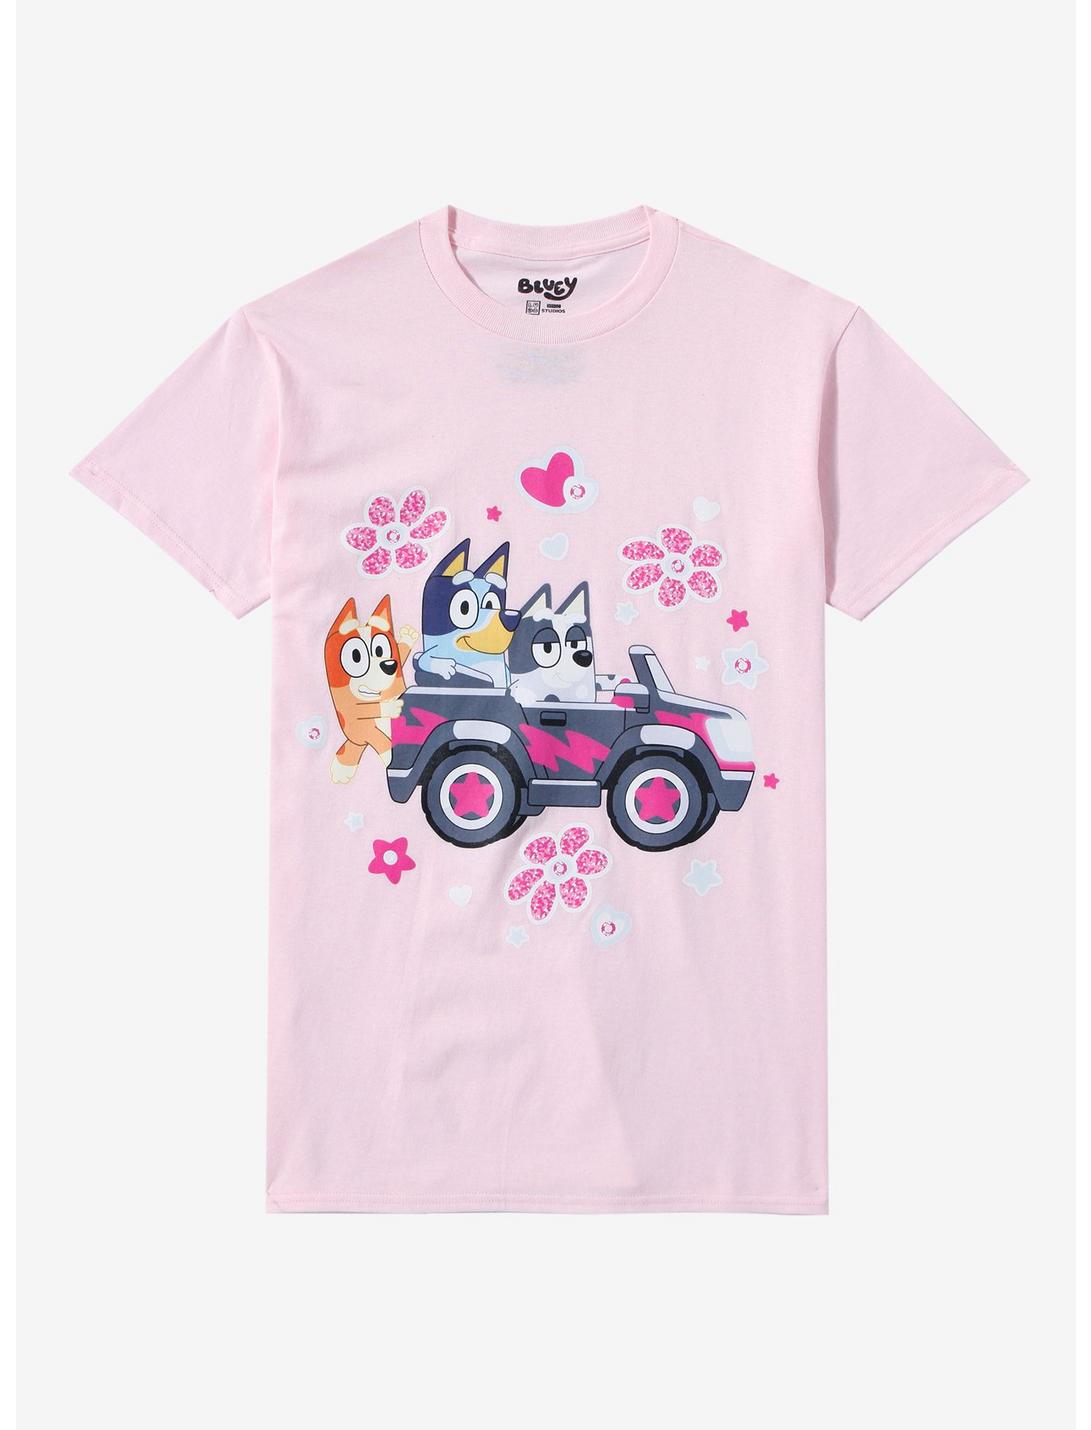 Bluey Muffin's Car Trio Boyfriend Fit Girls T-Shirt, MULTI, hi-res